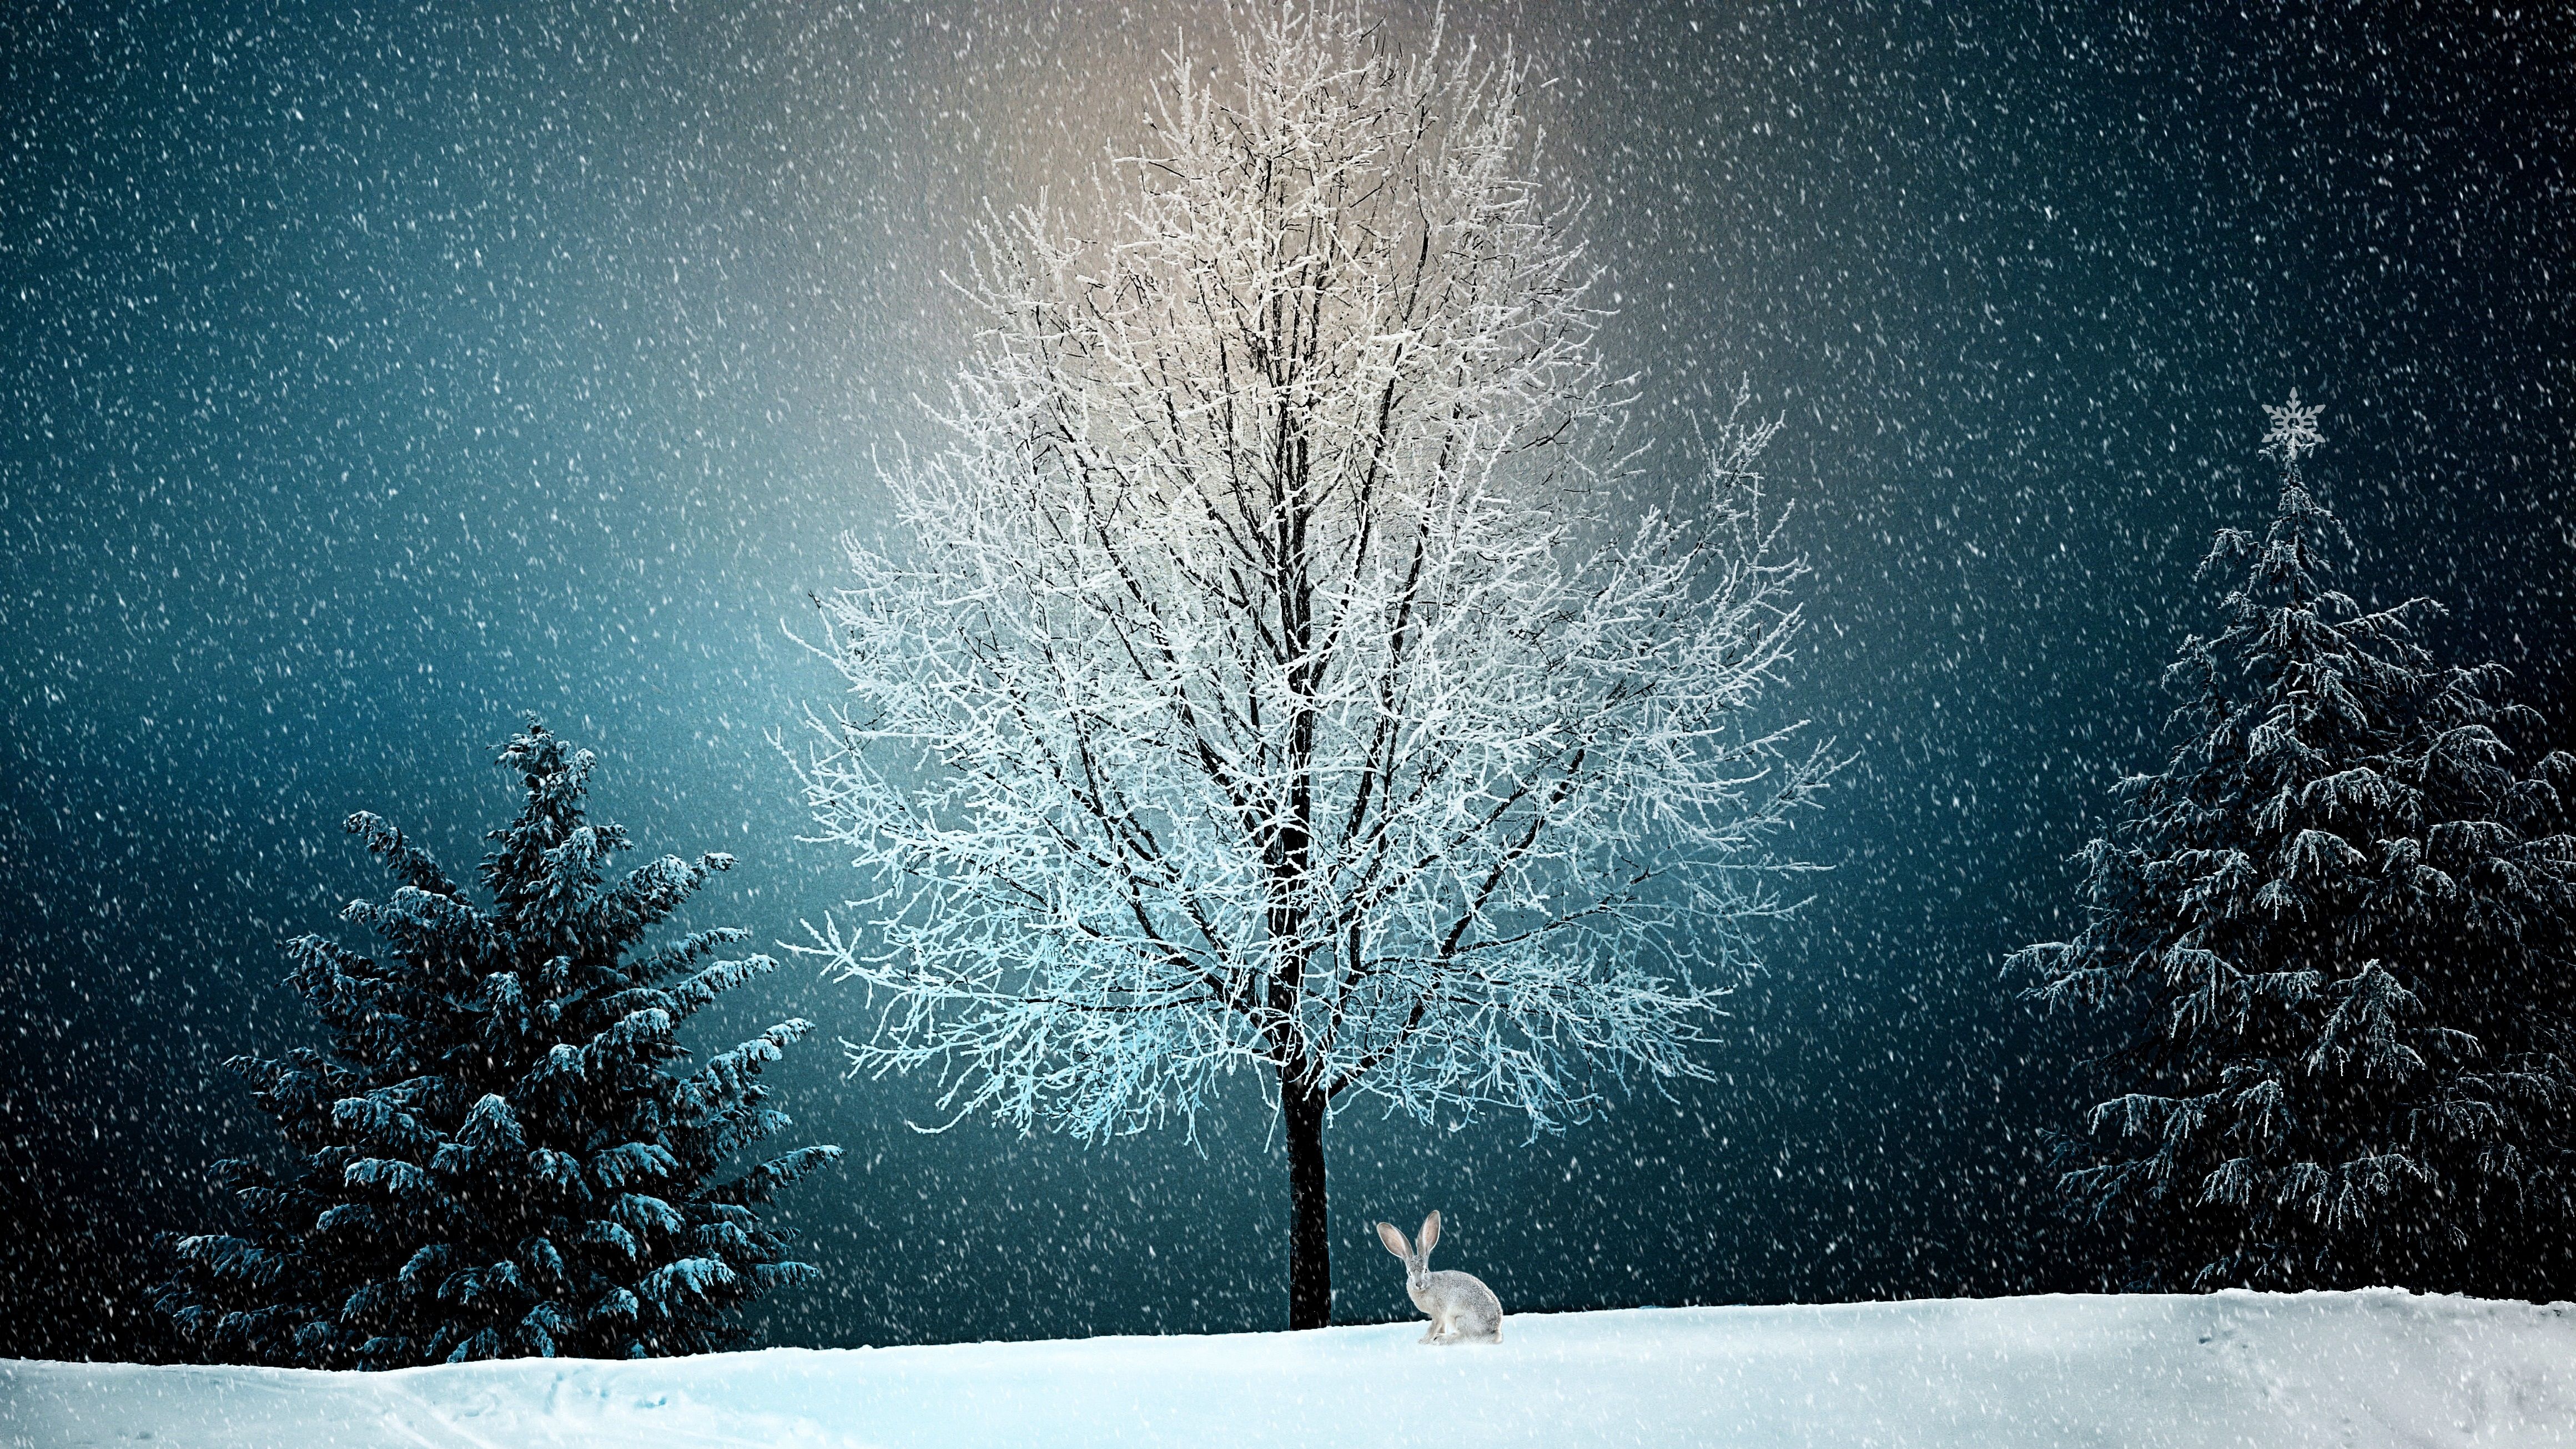 Winter Snow Tree 5k, HD Nature, 4k Wallpaper, Image, Background